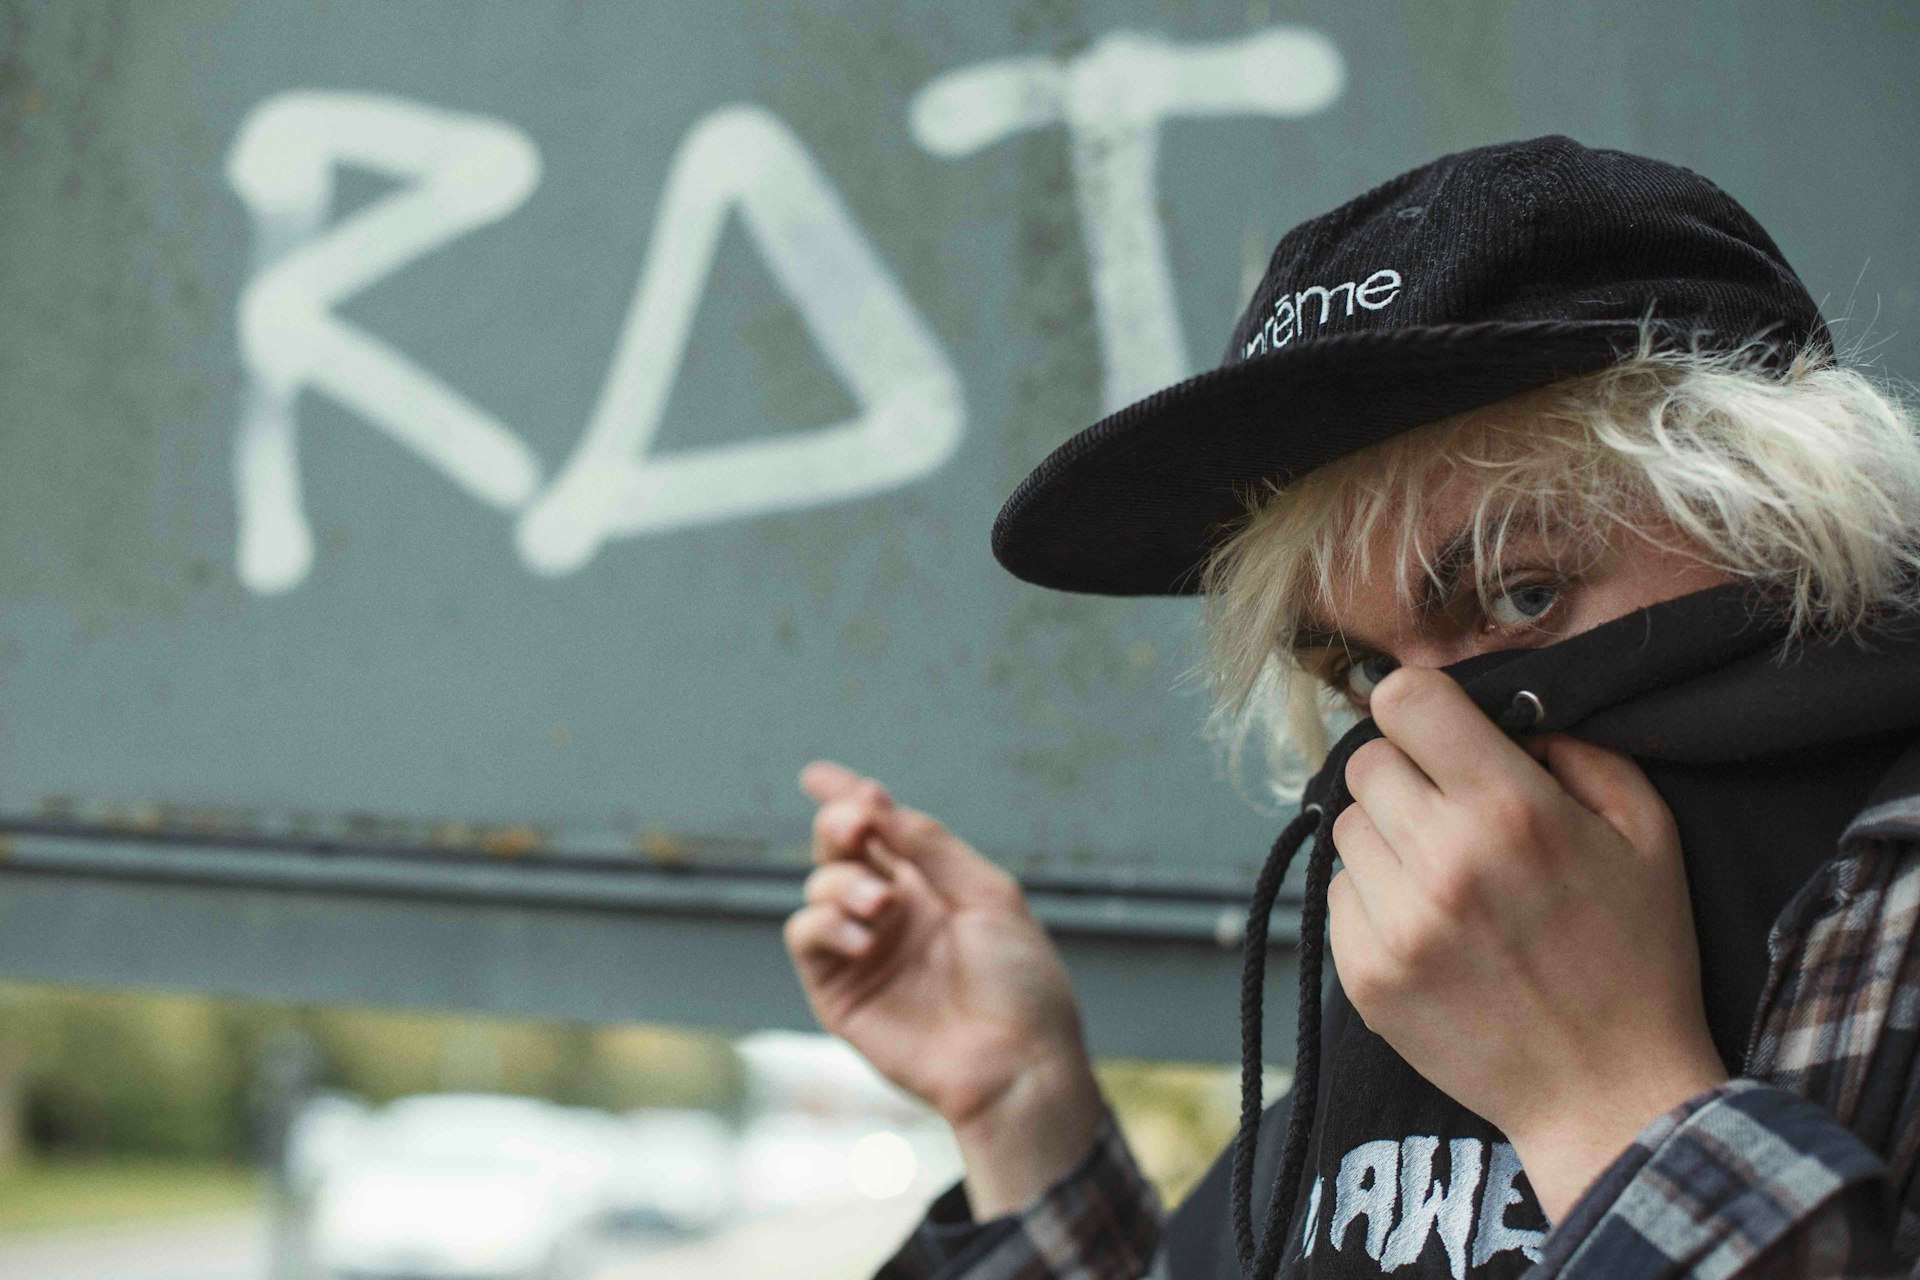 Rat Boy: The Essex skate rat firing up suburbia